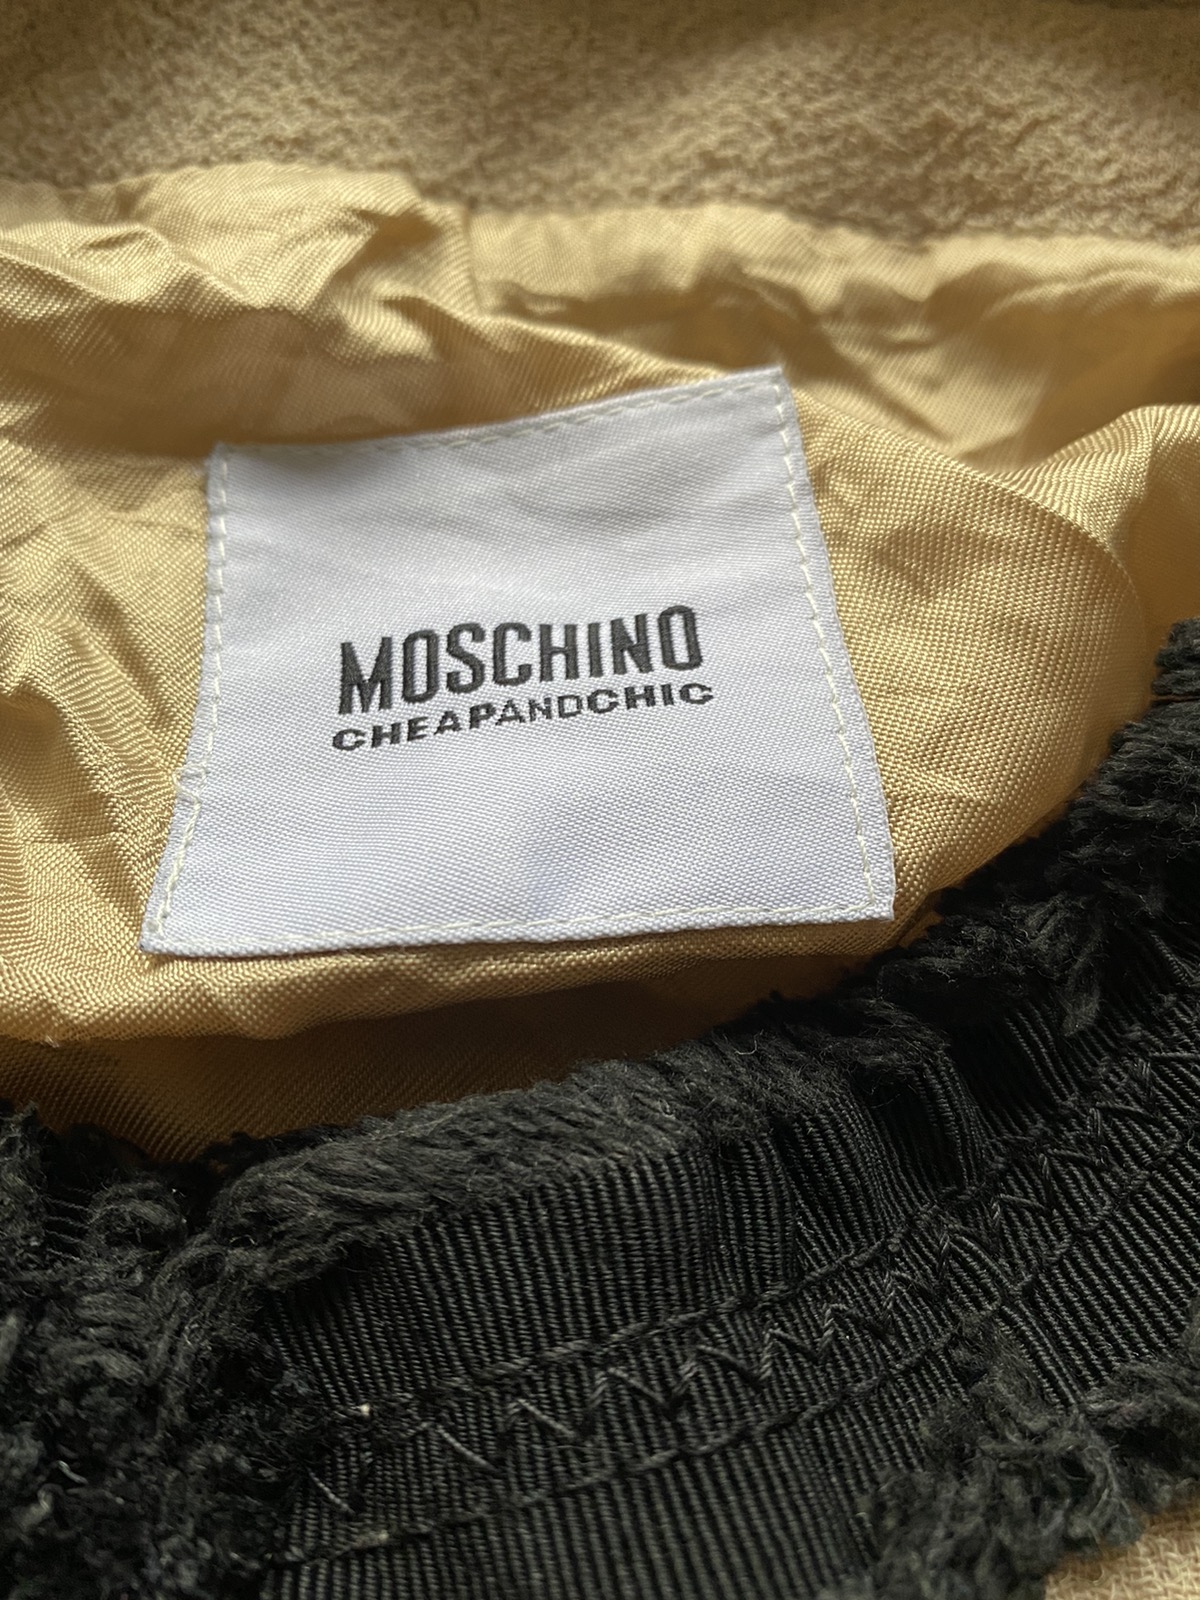 Moschino Cheapandchic - 4